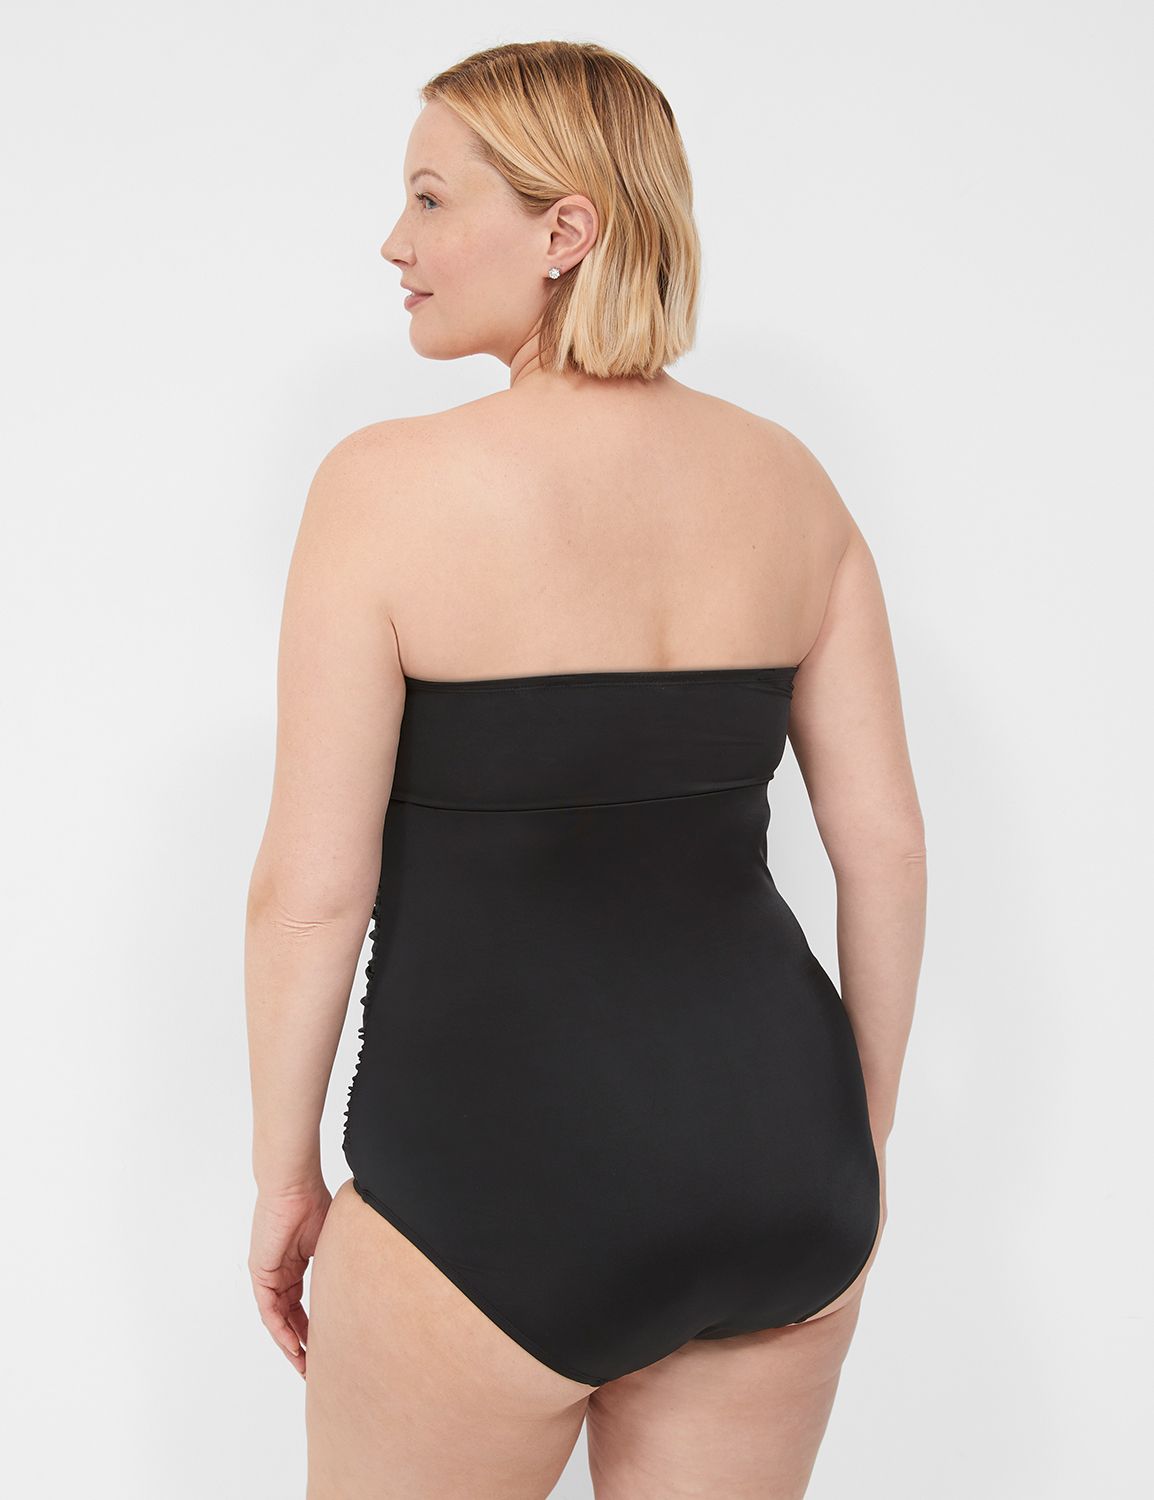 Cacique Plus Size Fishnet one piece swim suit with built-in bra